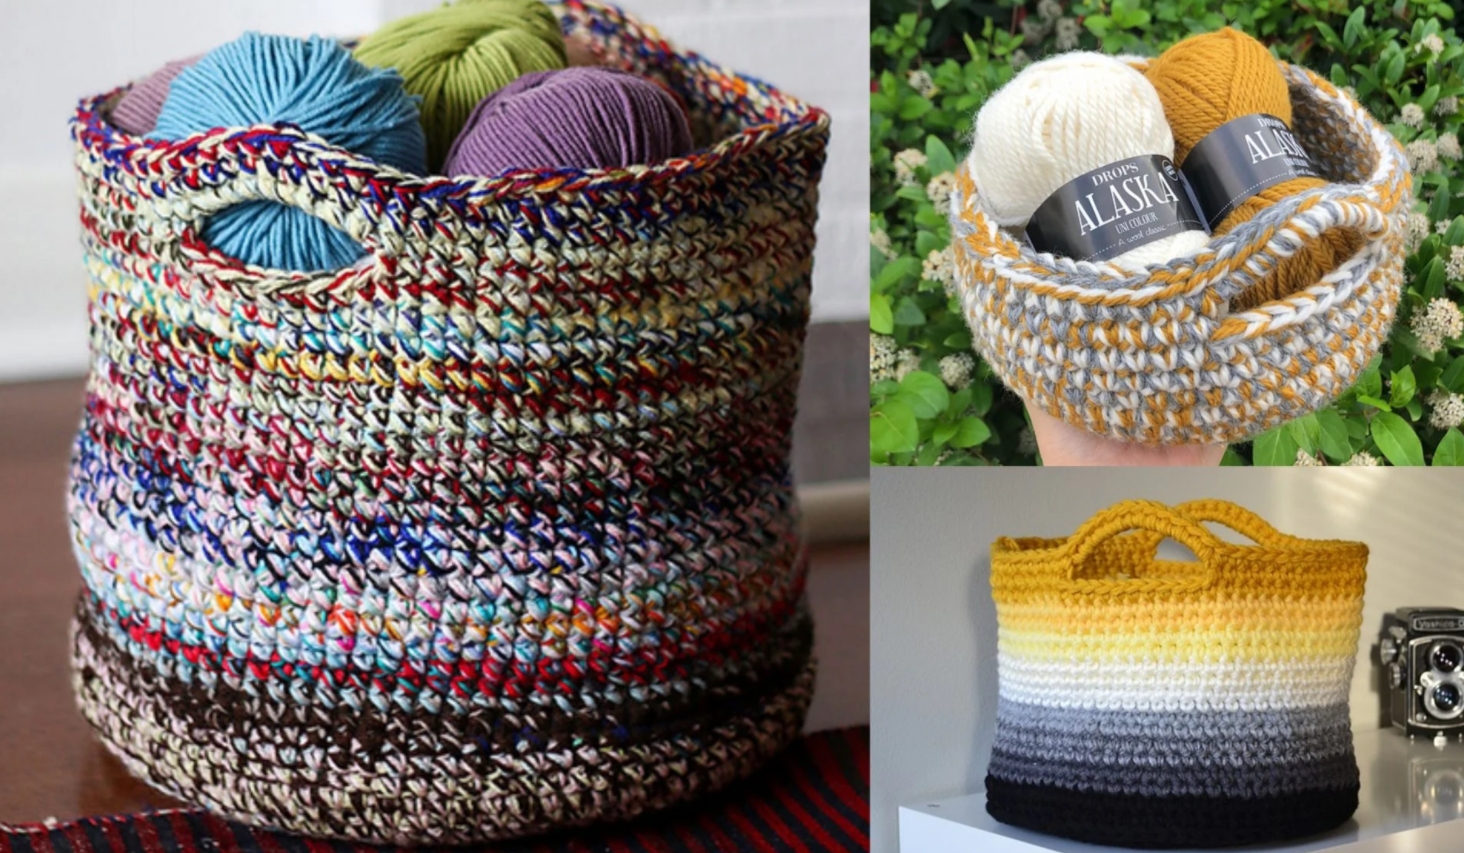 Wicker Designed Basket for Storage of Yarns